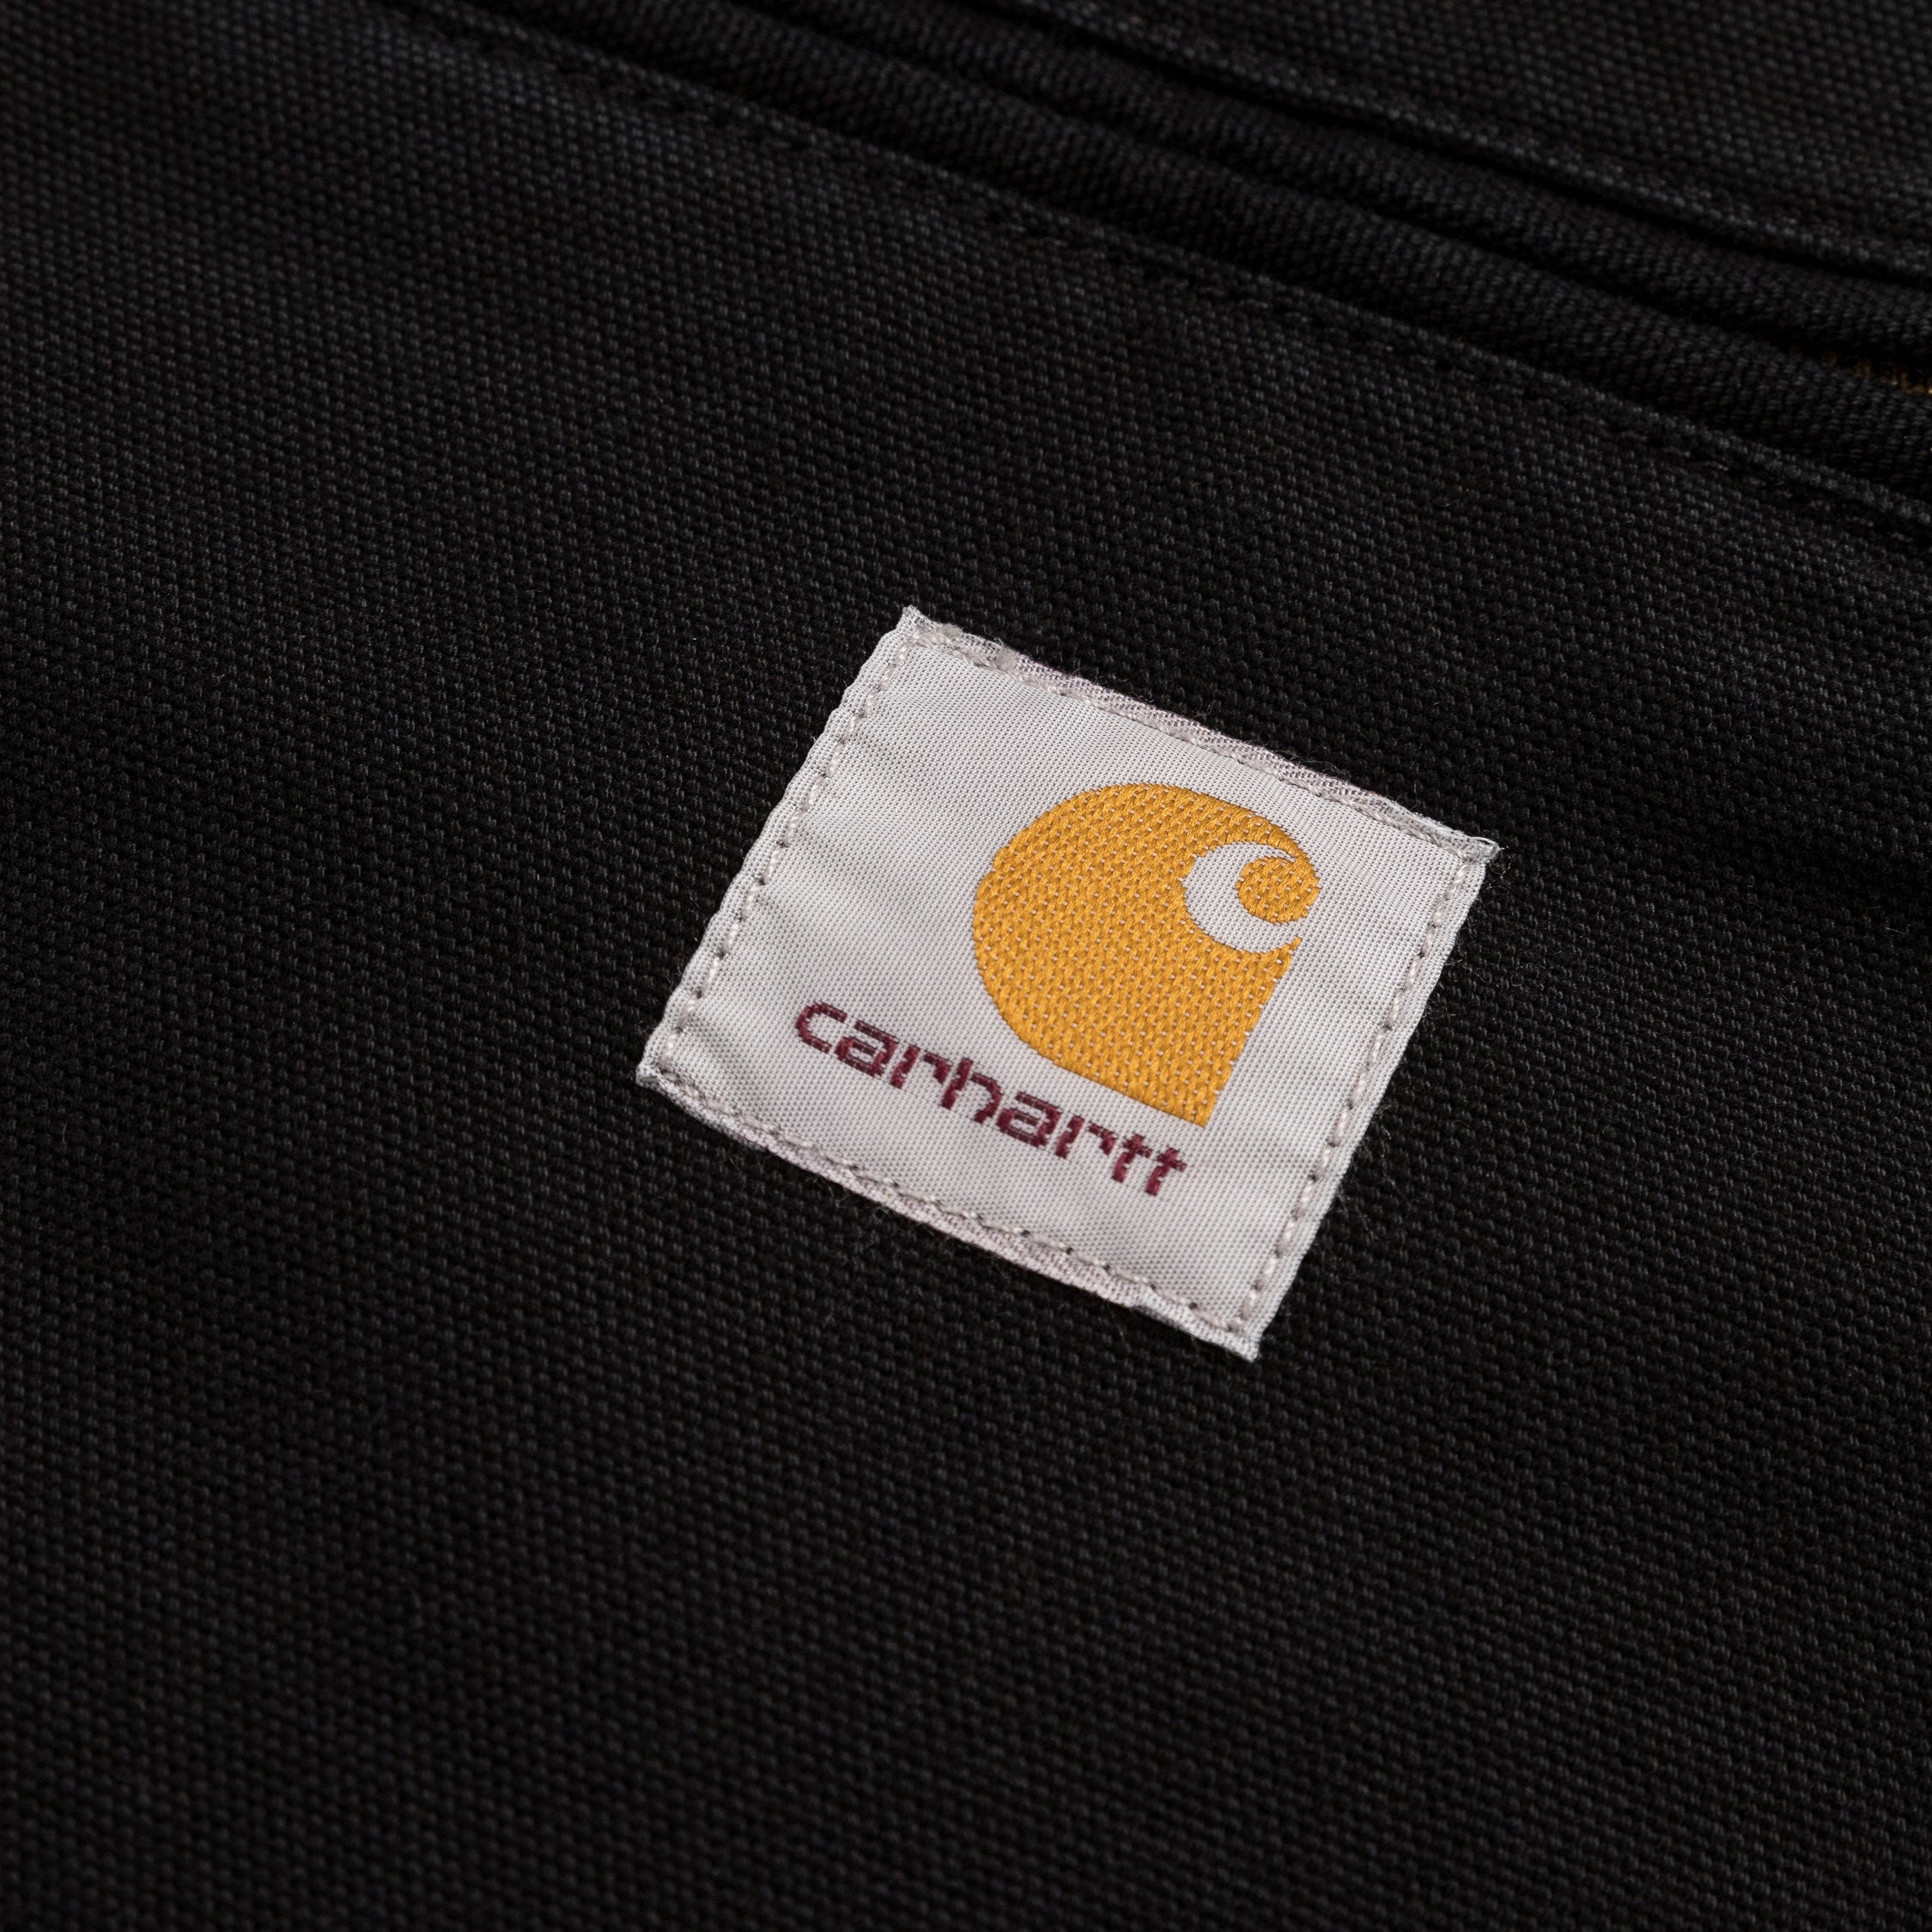 Carhartt WIP OG Detroit Jacket » Buy online now!